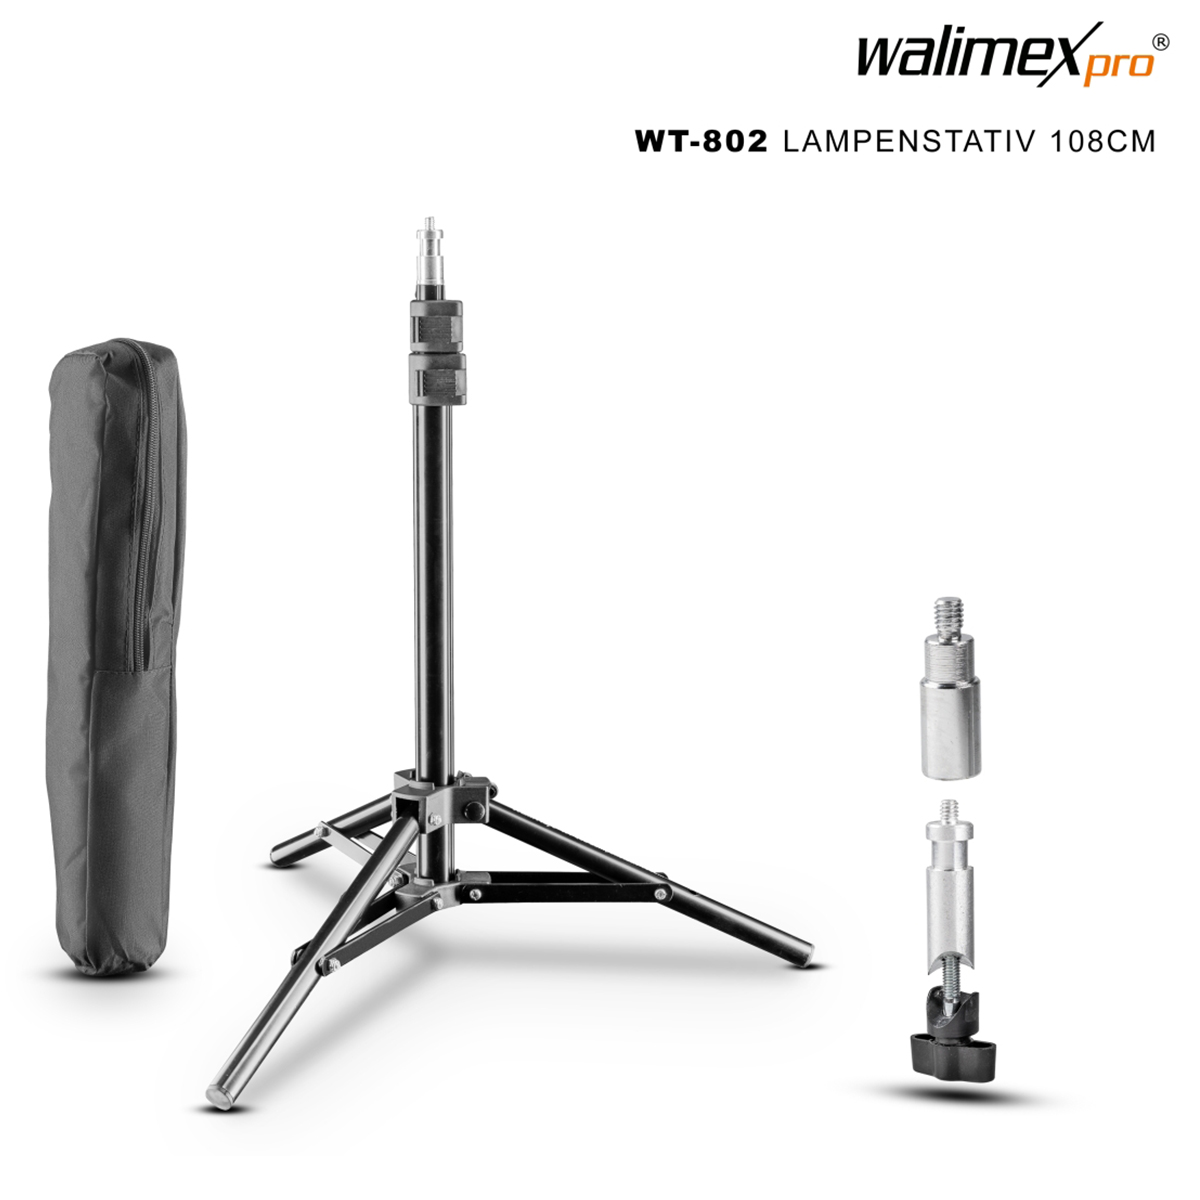 Walimex pro WT-802 Lampenstativ 108cm